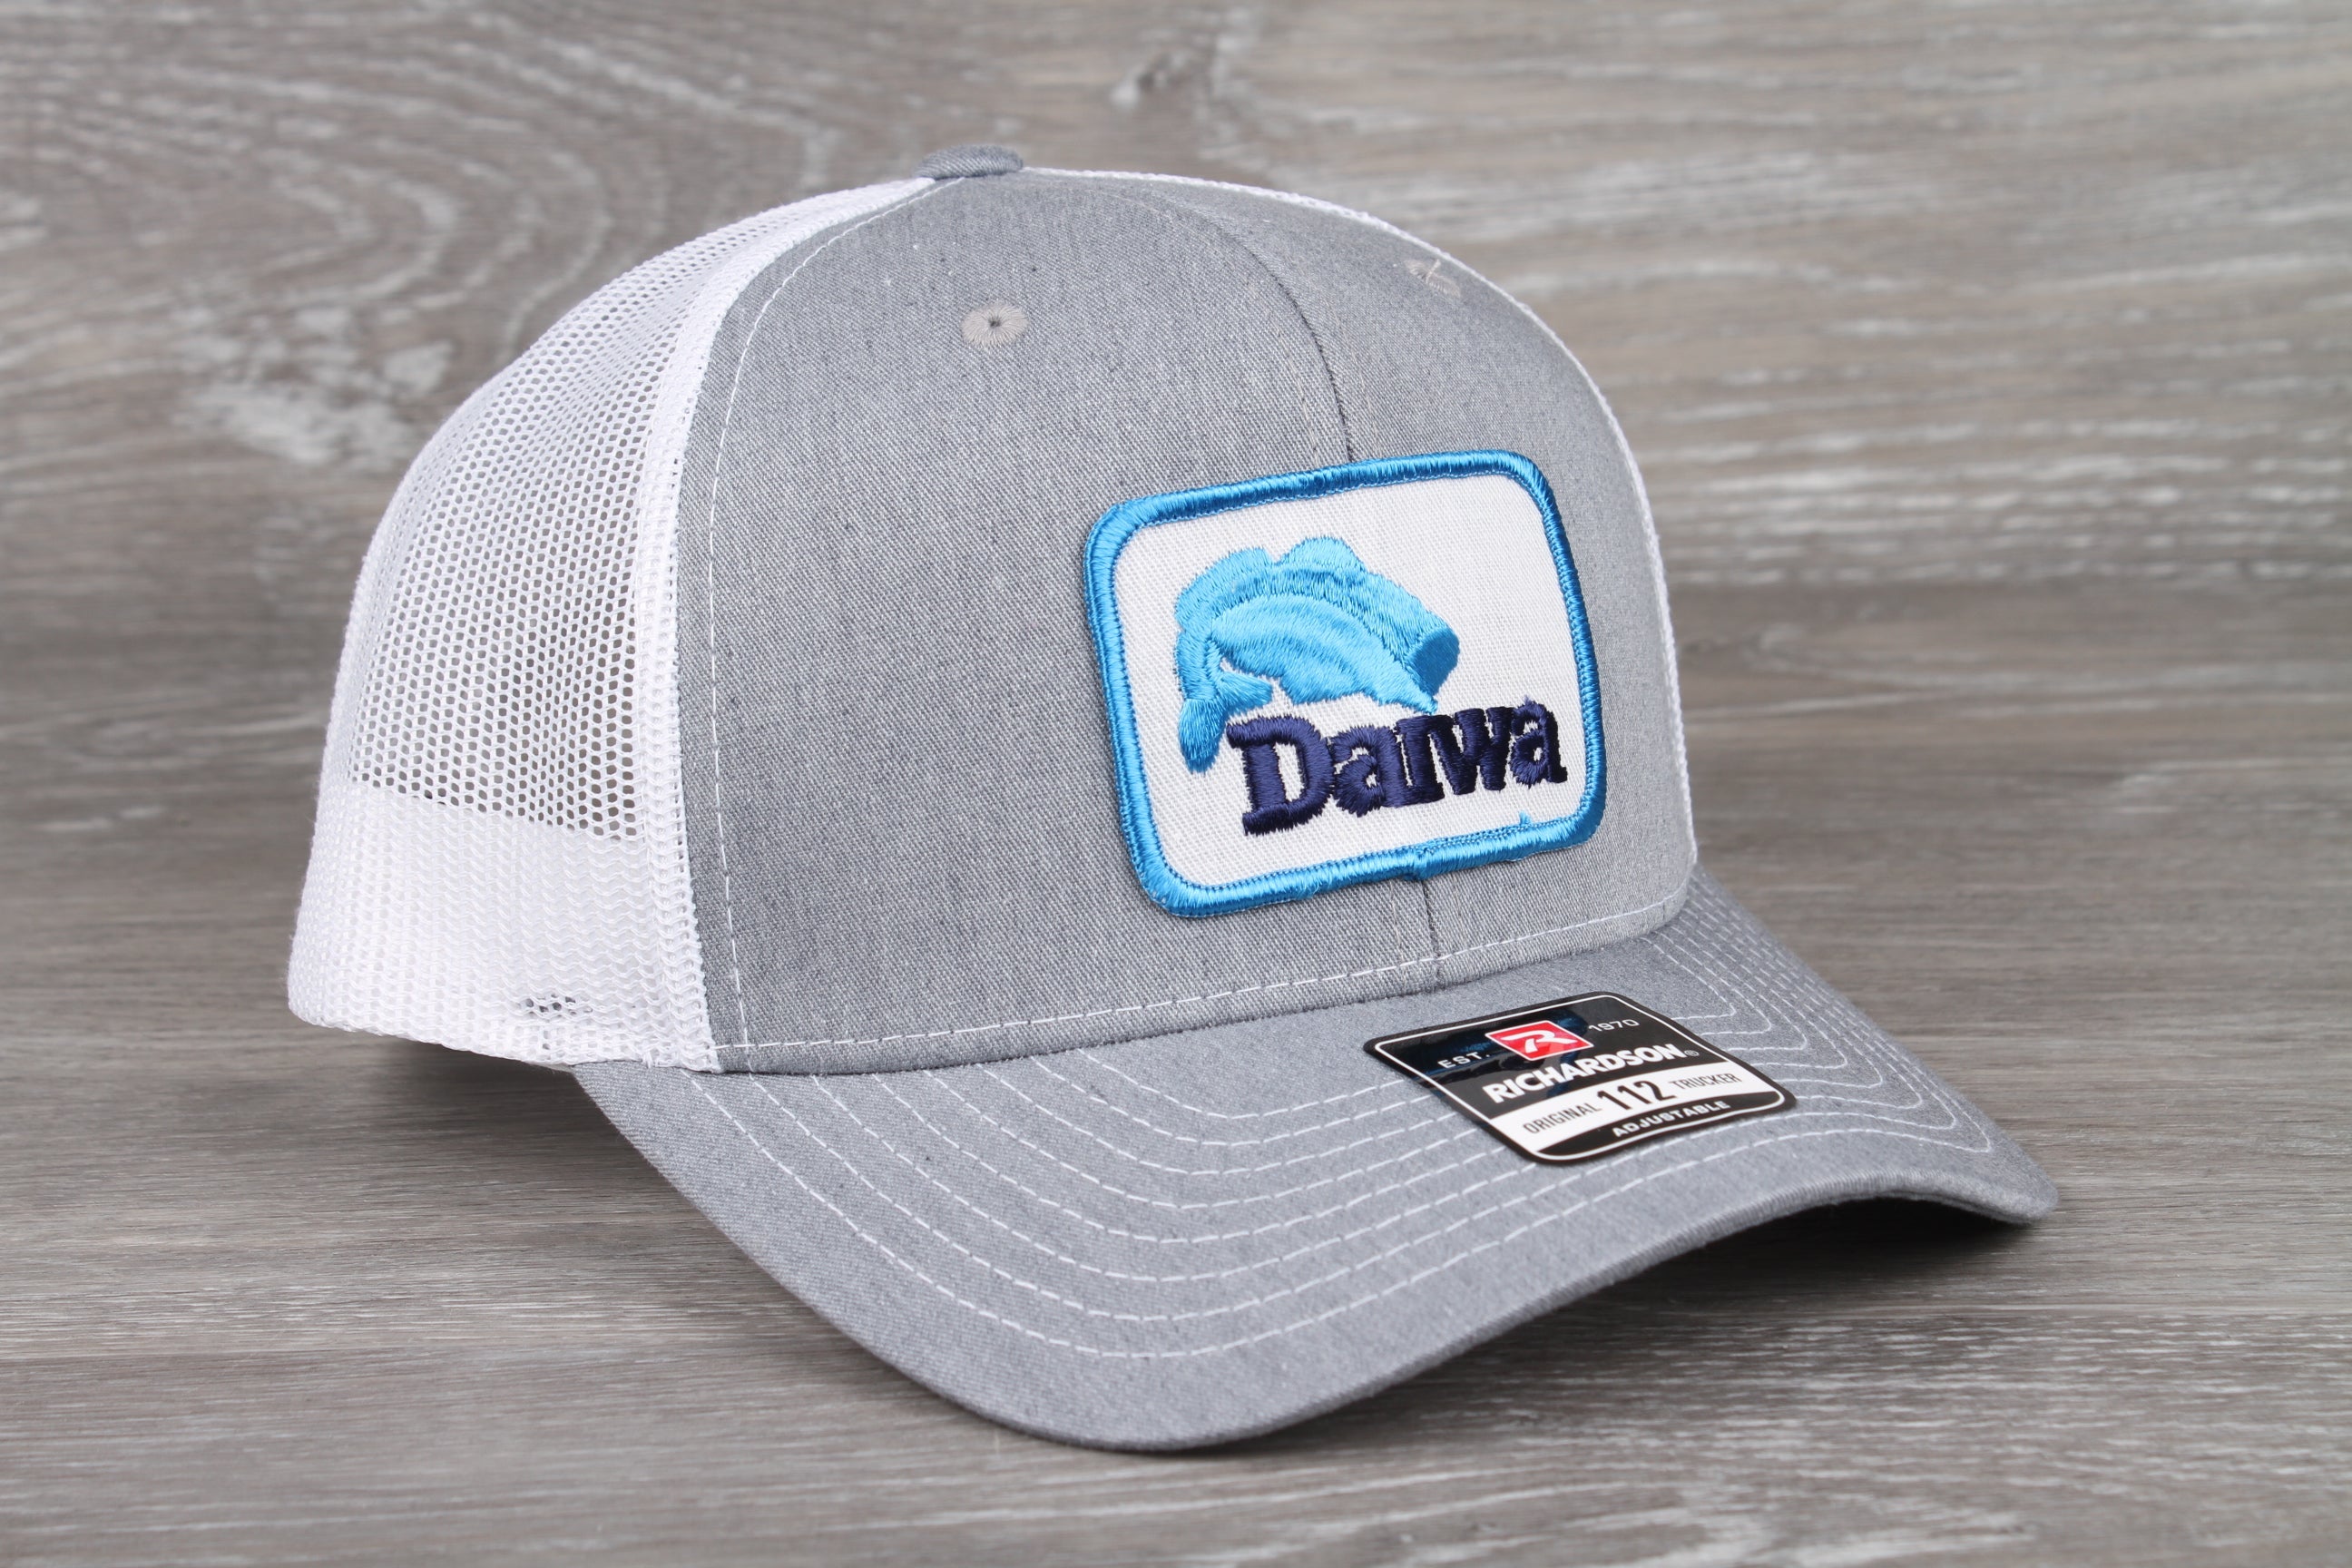 Lot of 4 Team Daiwa Fishing White Visor Hats Texace Made USA